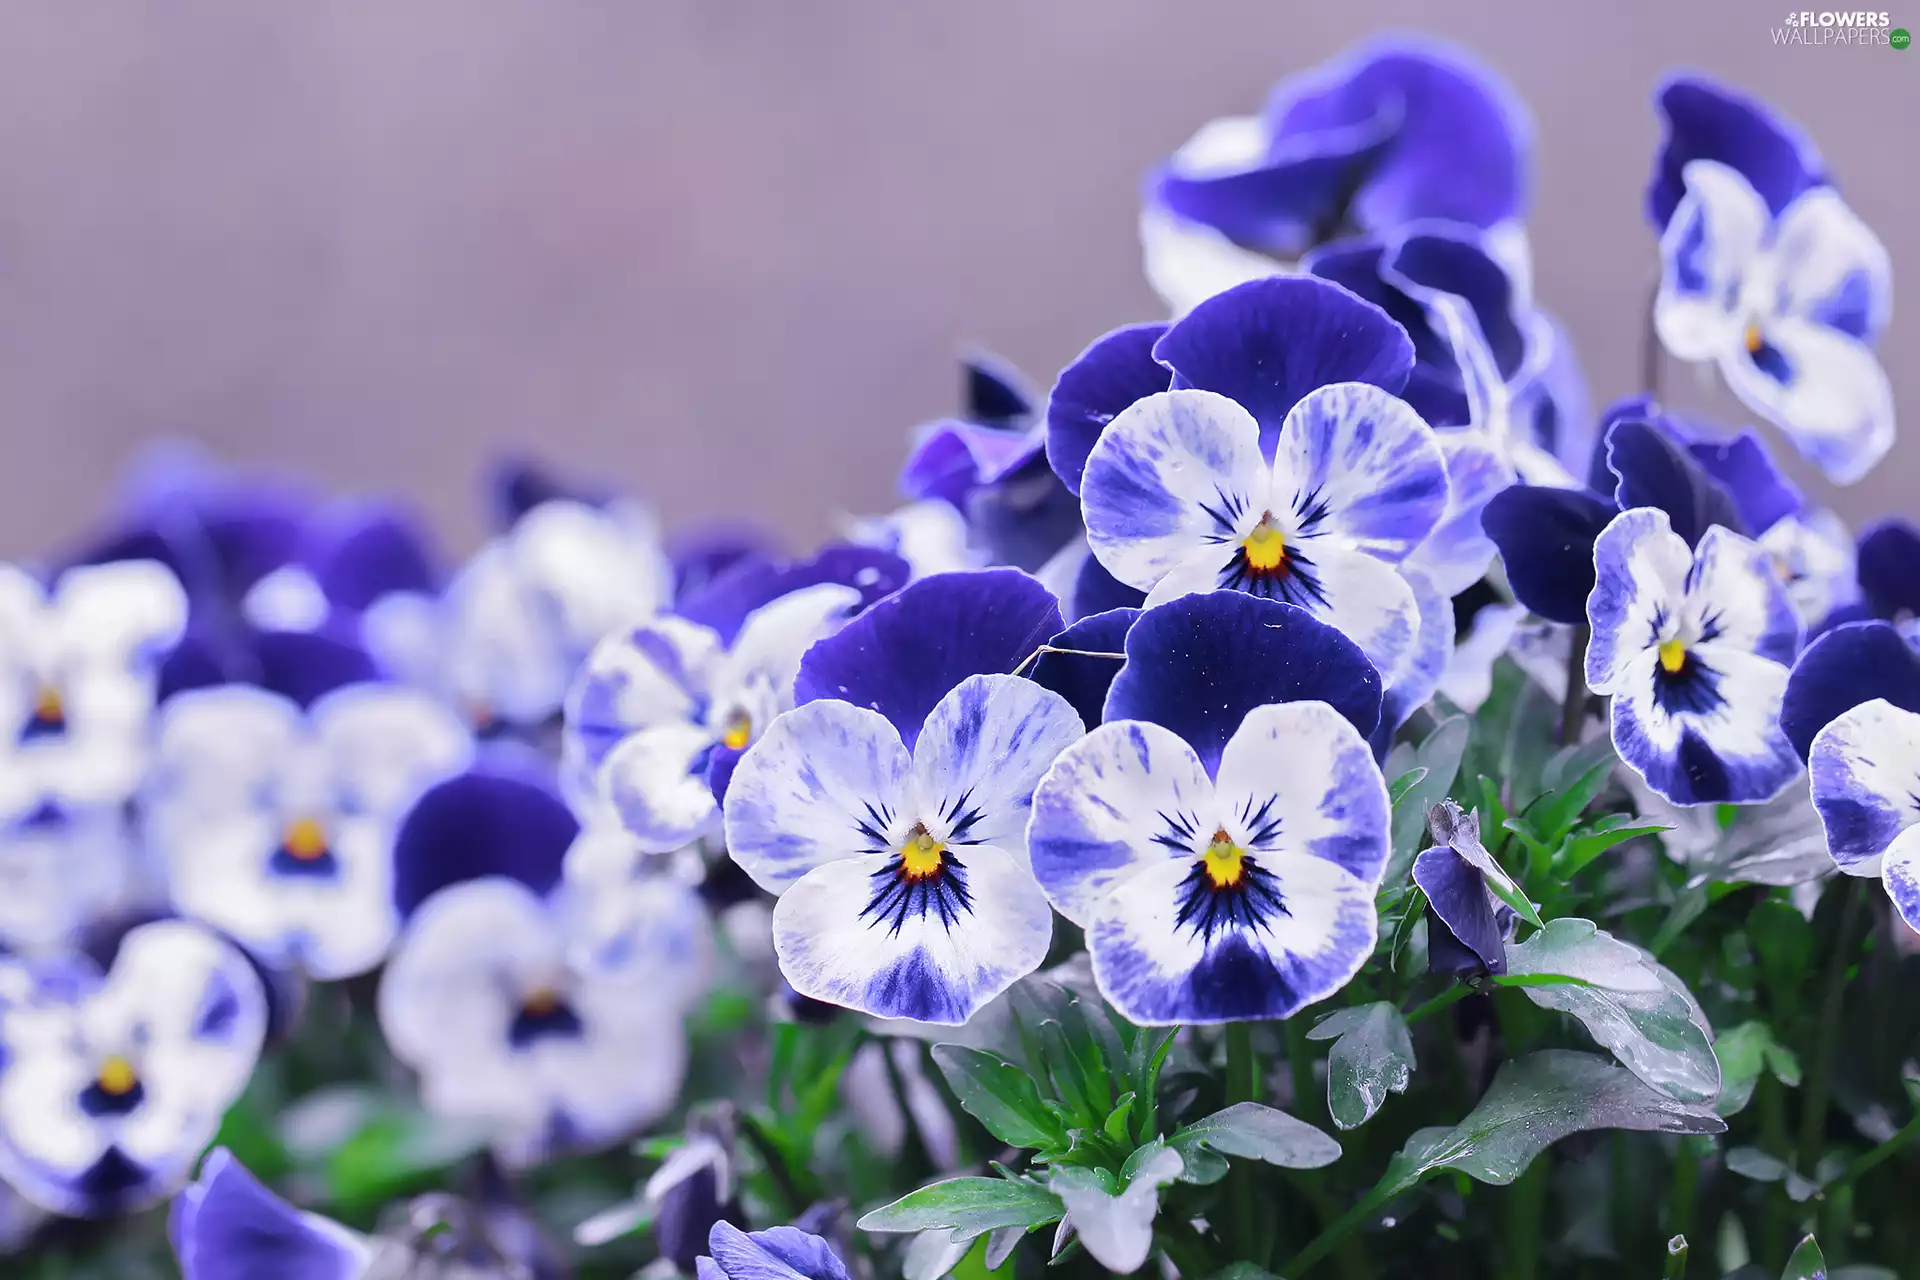 blue, pansies, Flowers, White